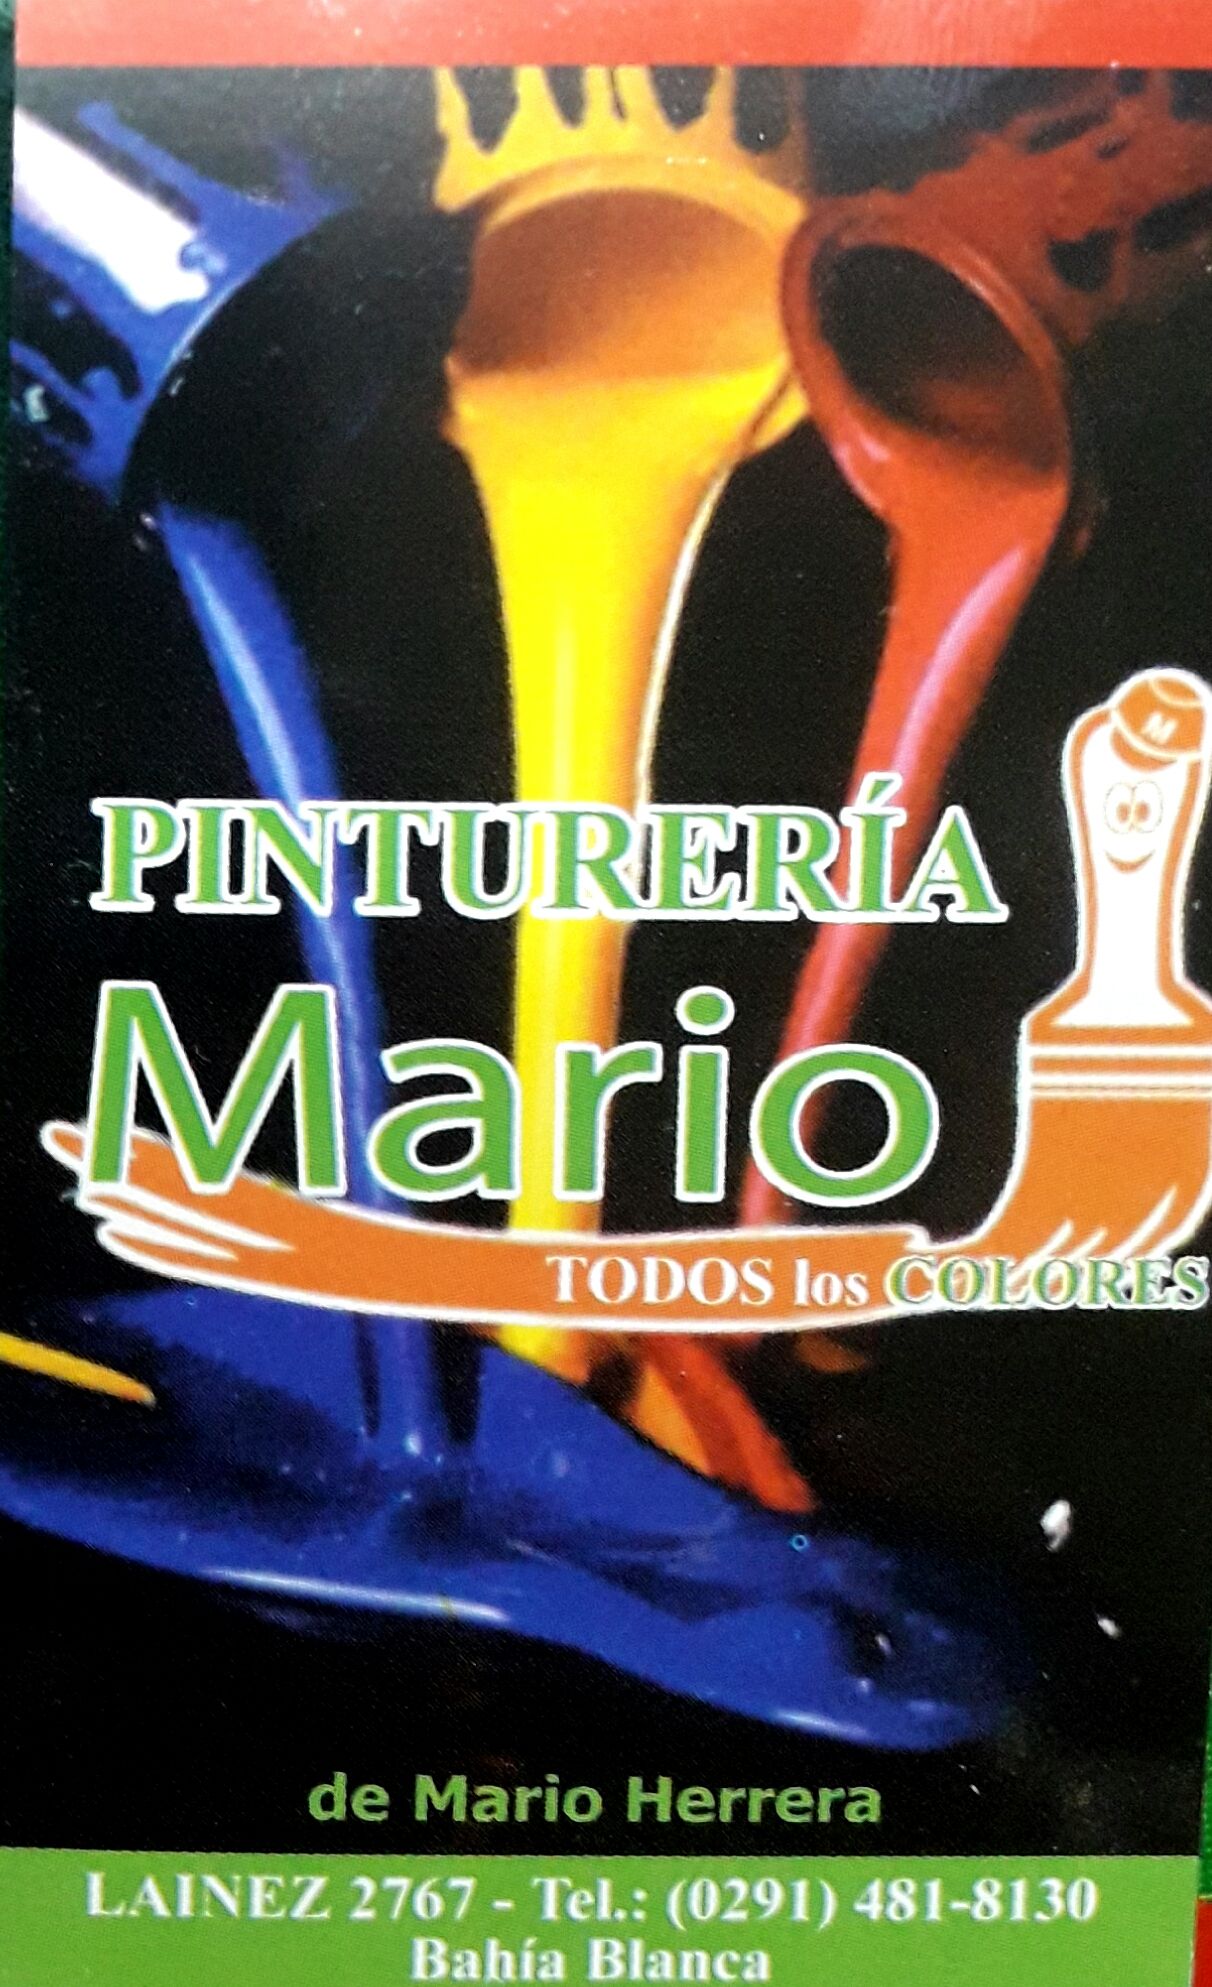 Logotipo Pintureria Mario